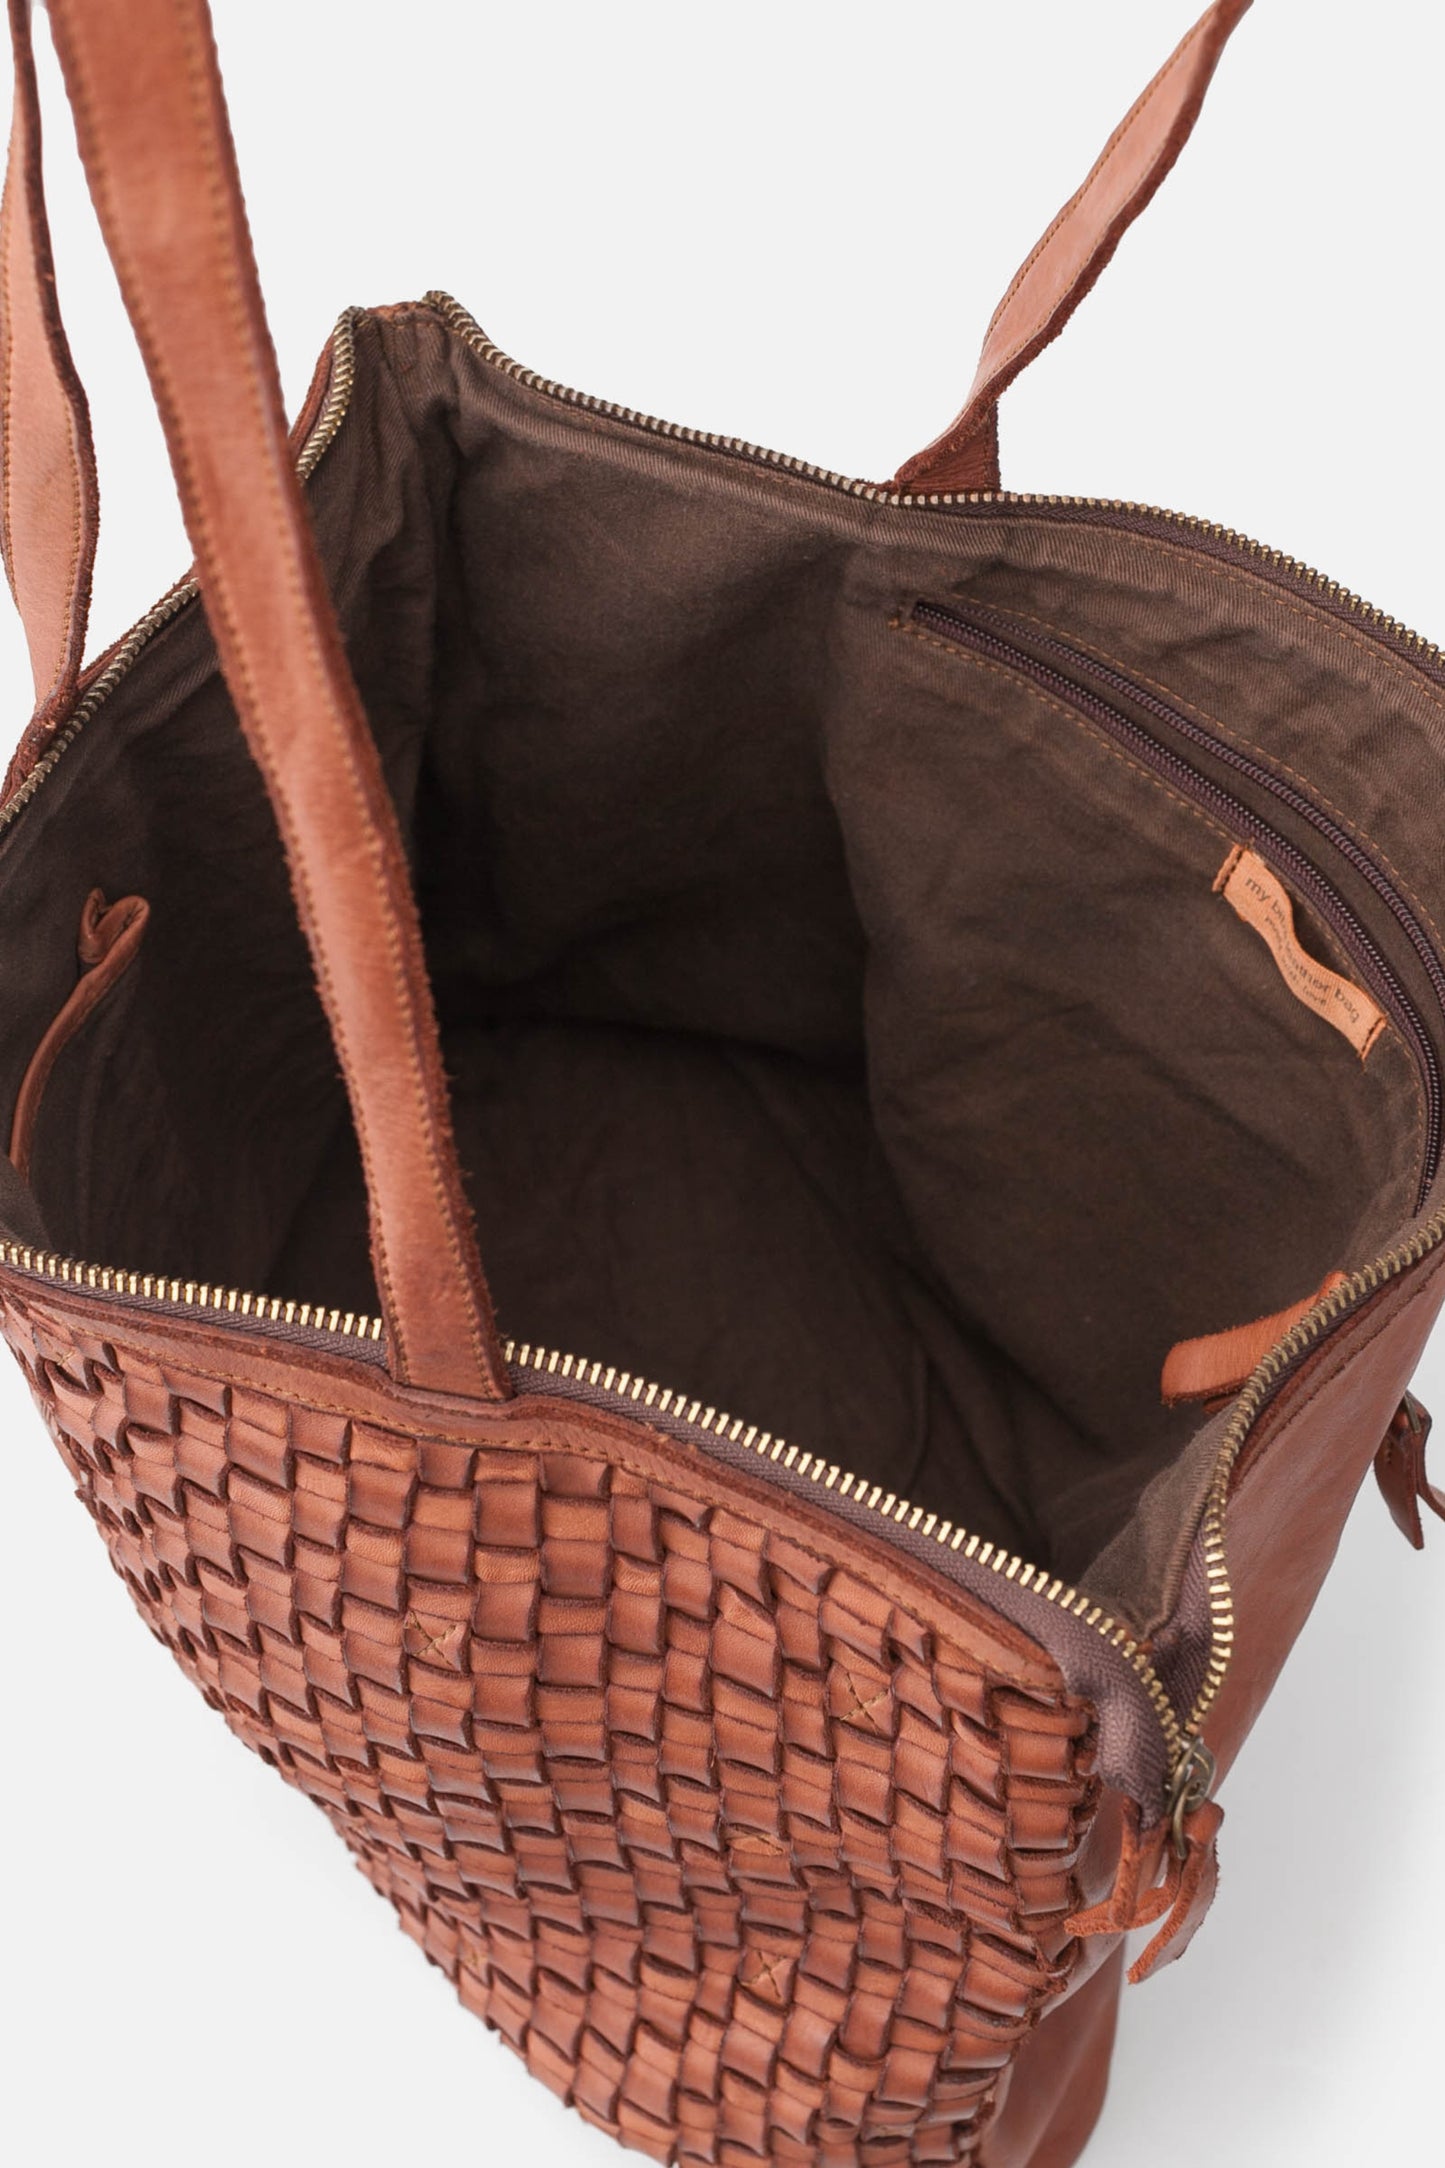 KANSAS - Braided Leather Bag